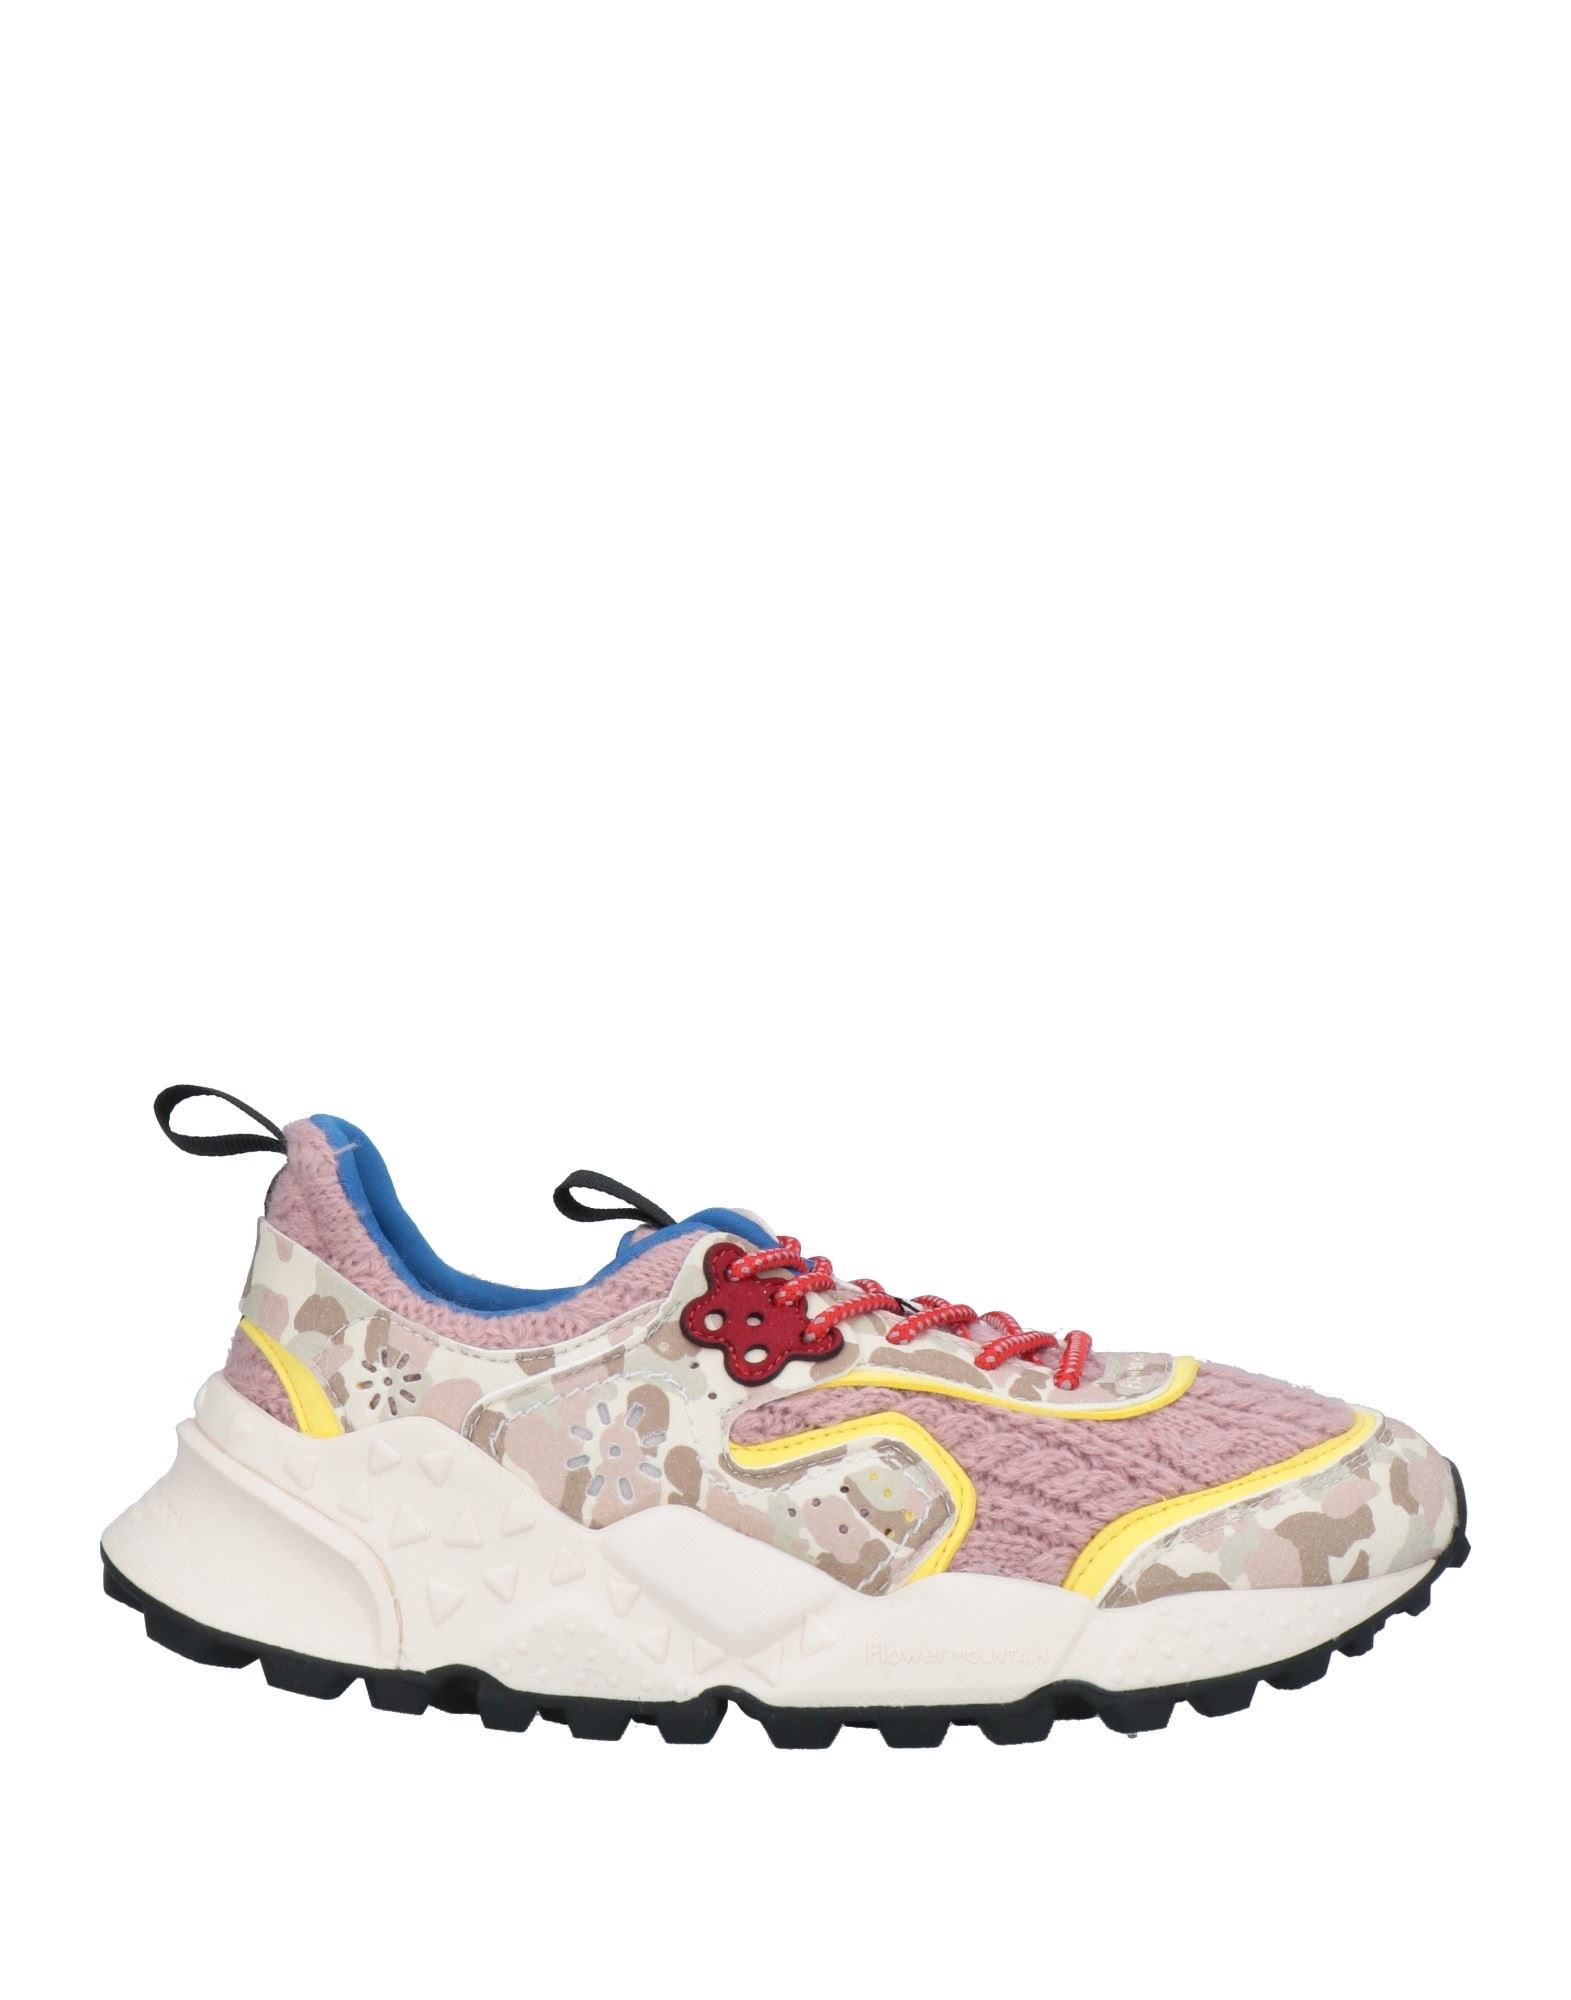 Flower Mountain Sneakers In Pastel Pink